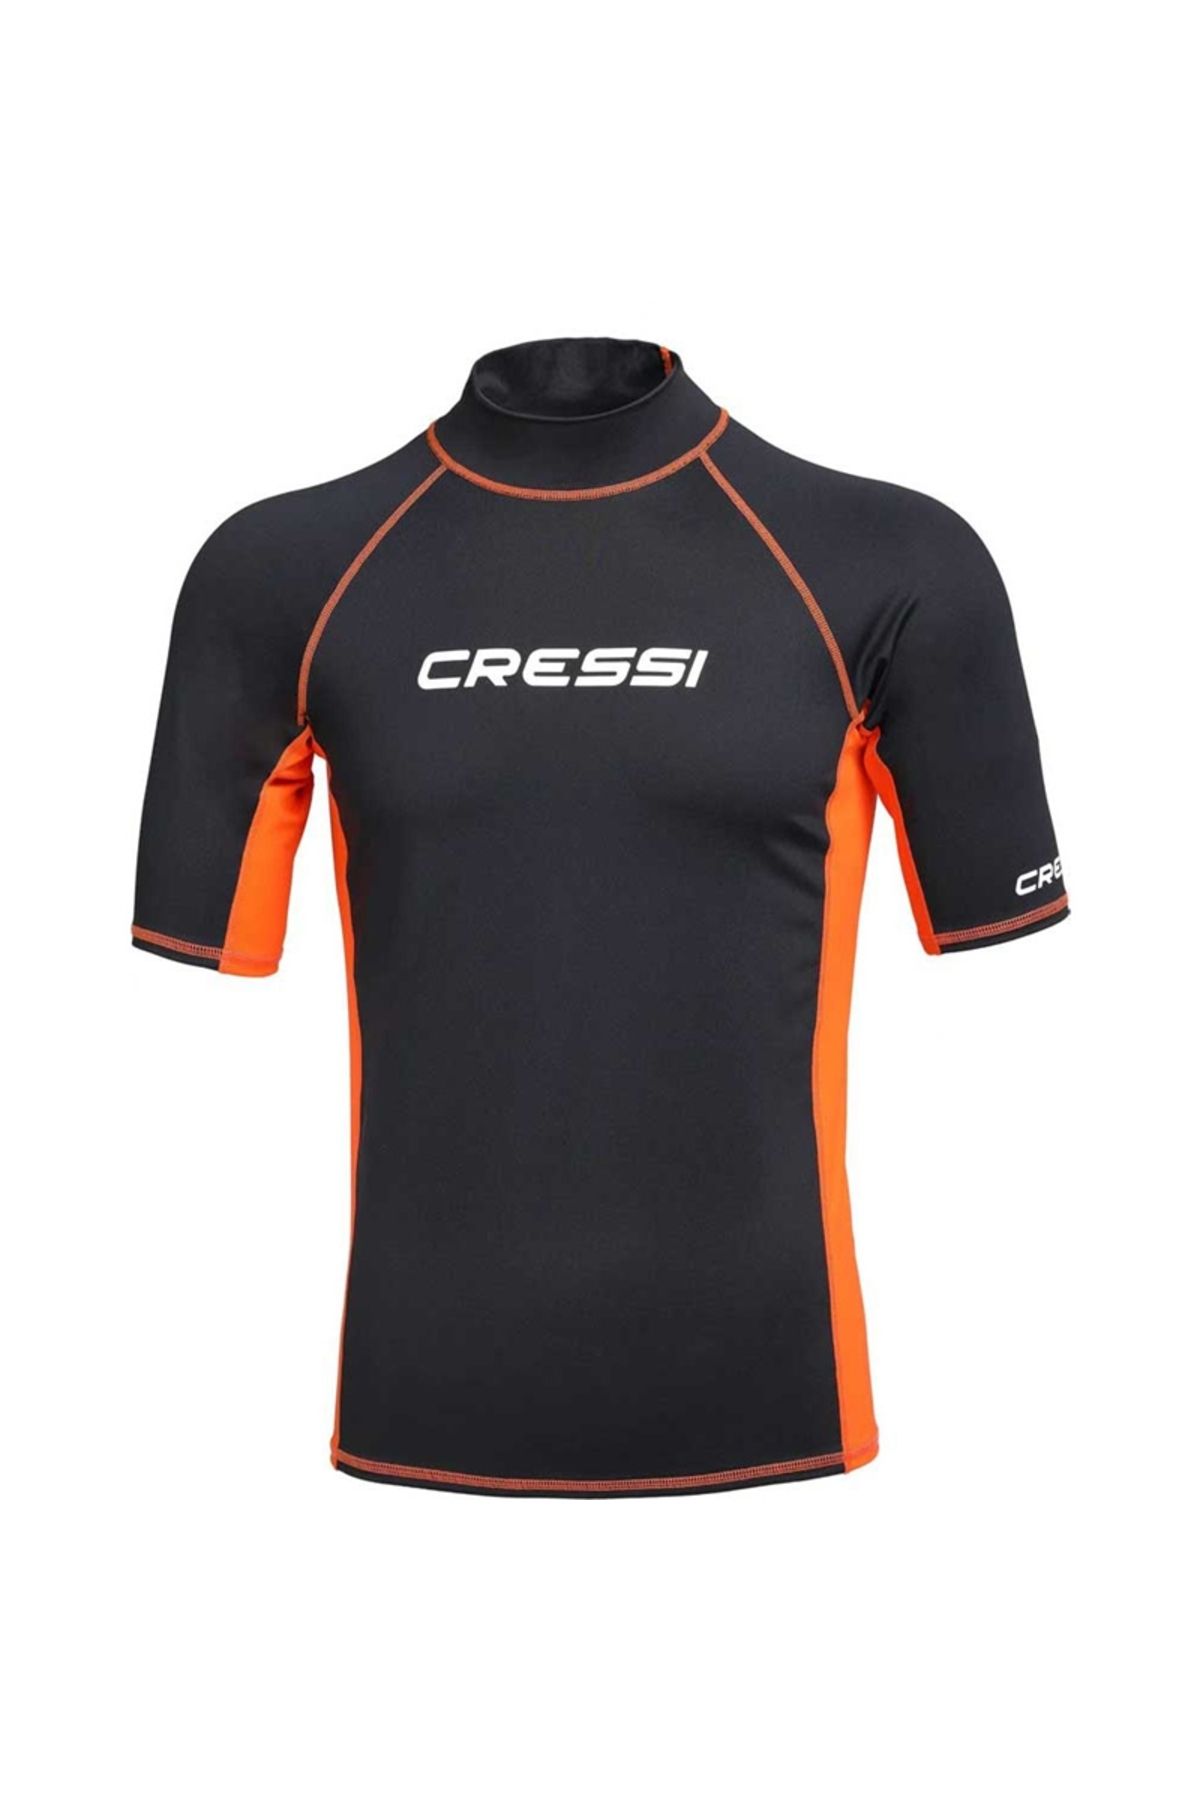 cressi sub Rash Guard Man T-Shirt BLACK - ORANGE-M - NO:3